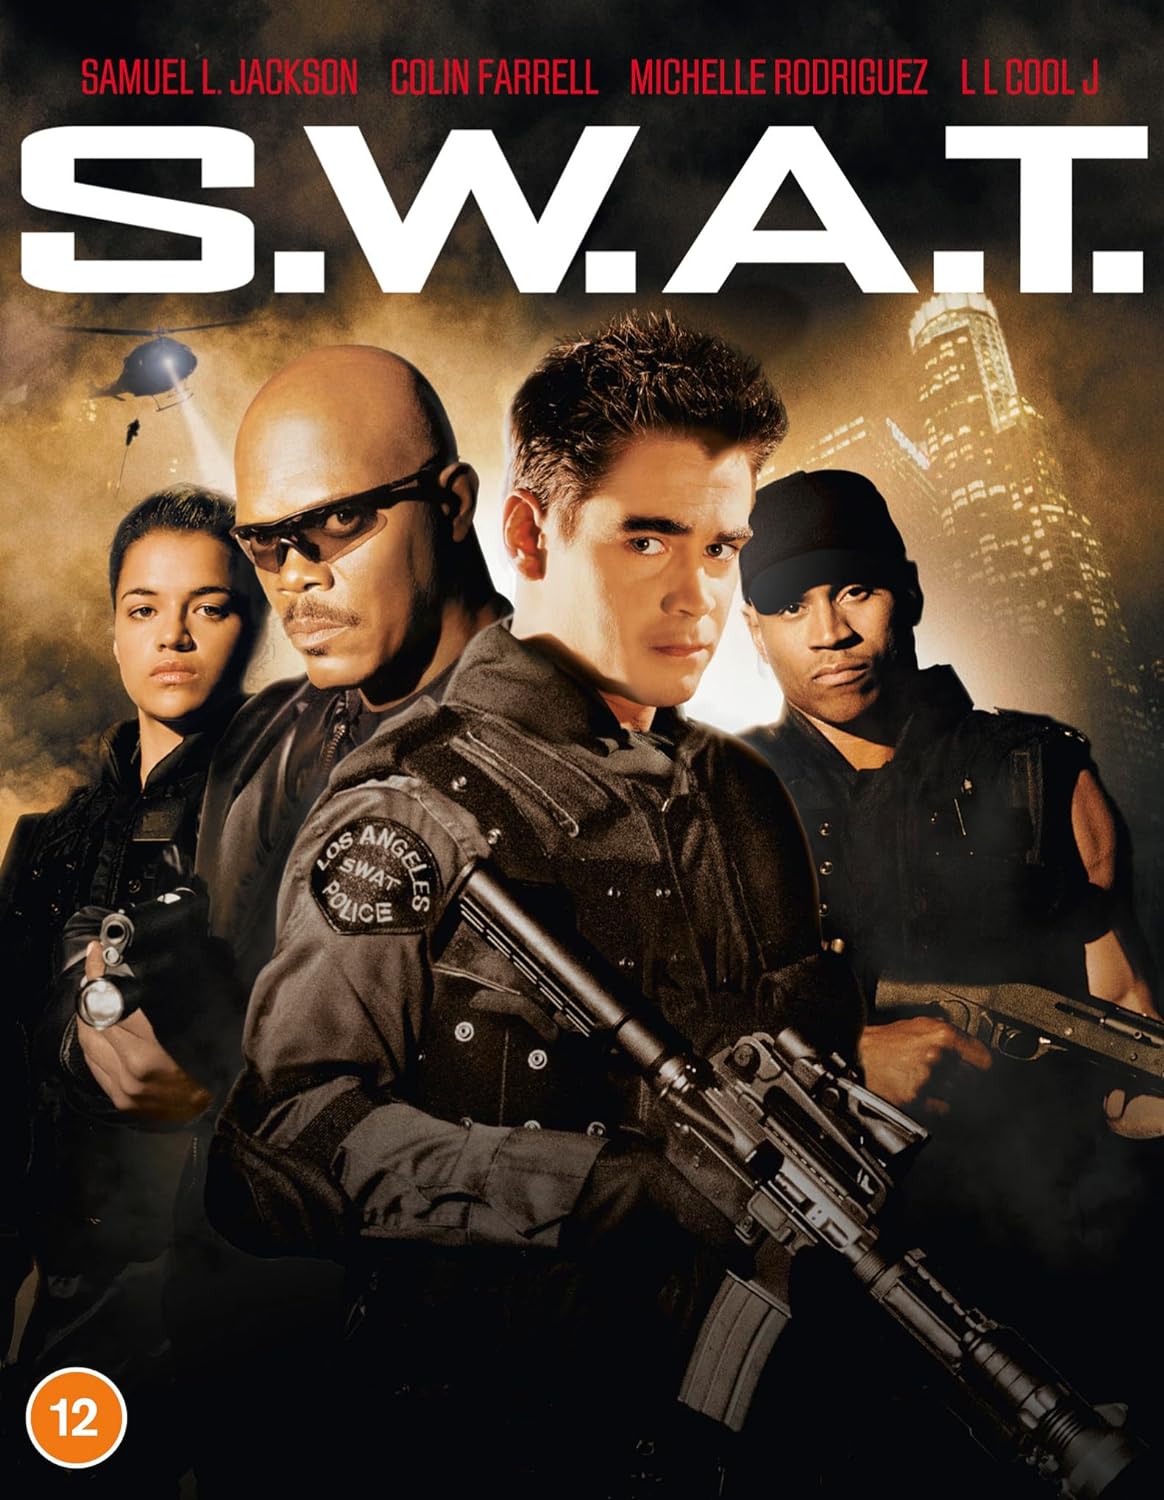 S.W.A.T. Blu-ray with Slipcover (88 Films/Region B)